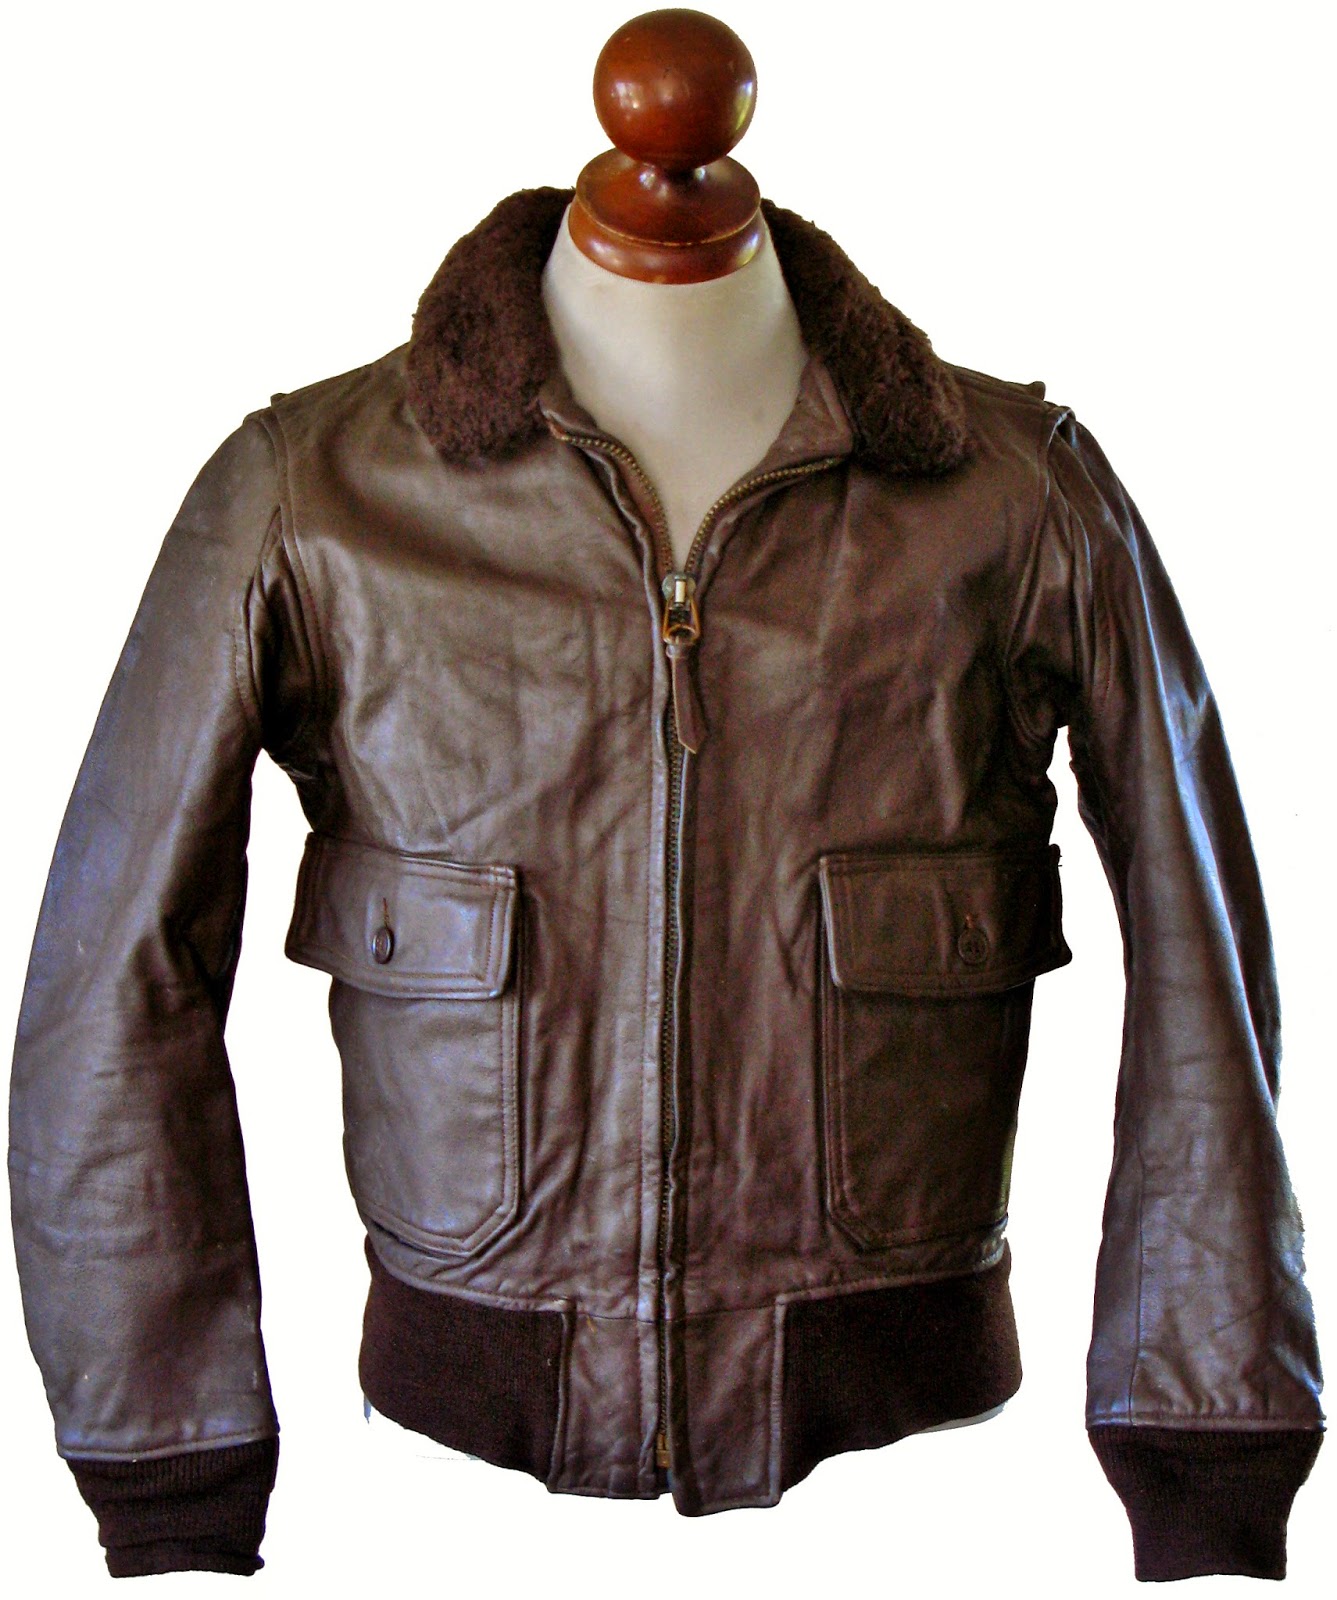 G-1 flight jacket with General zipper